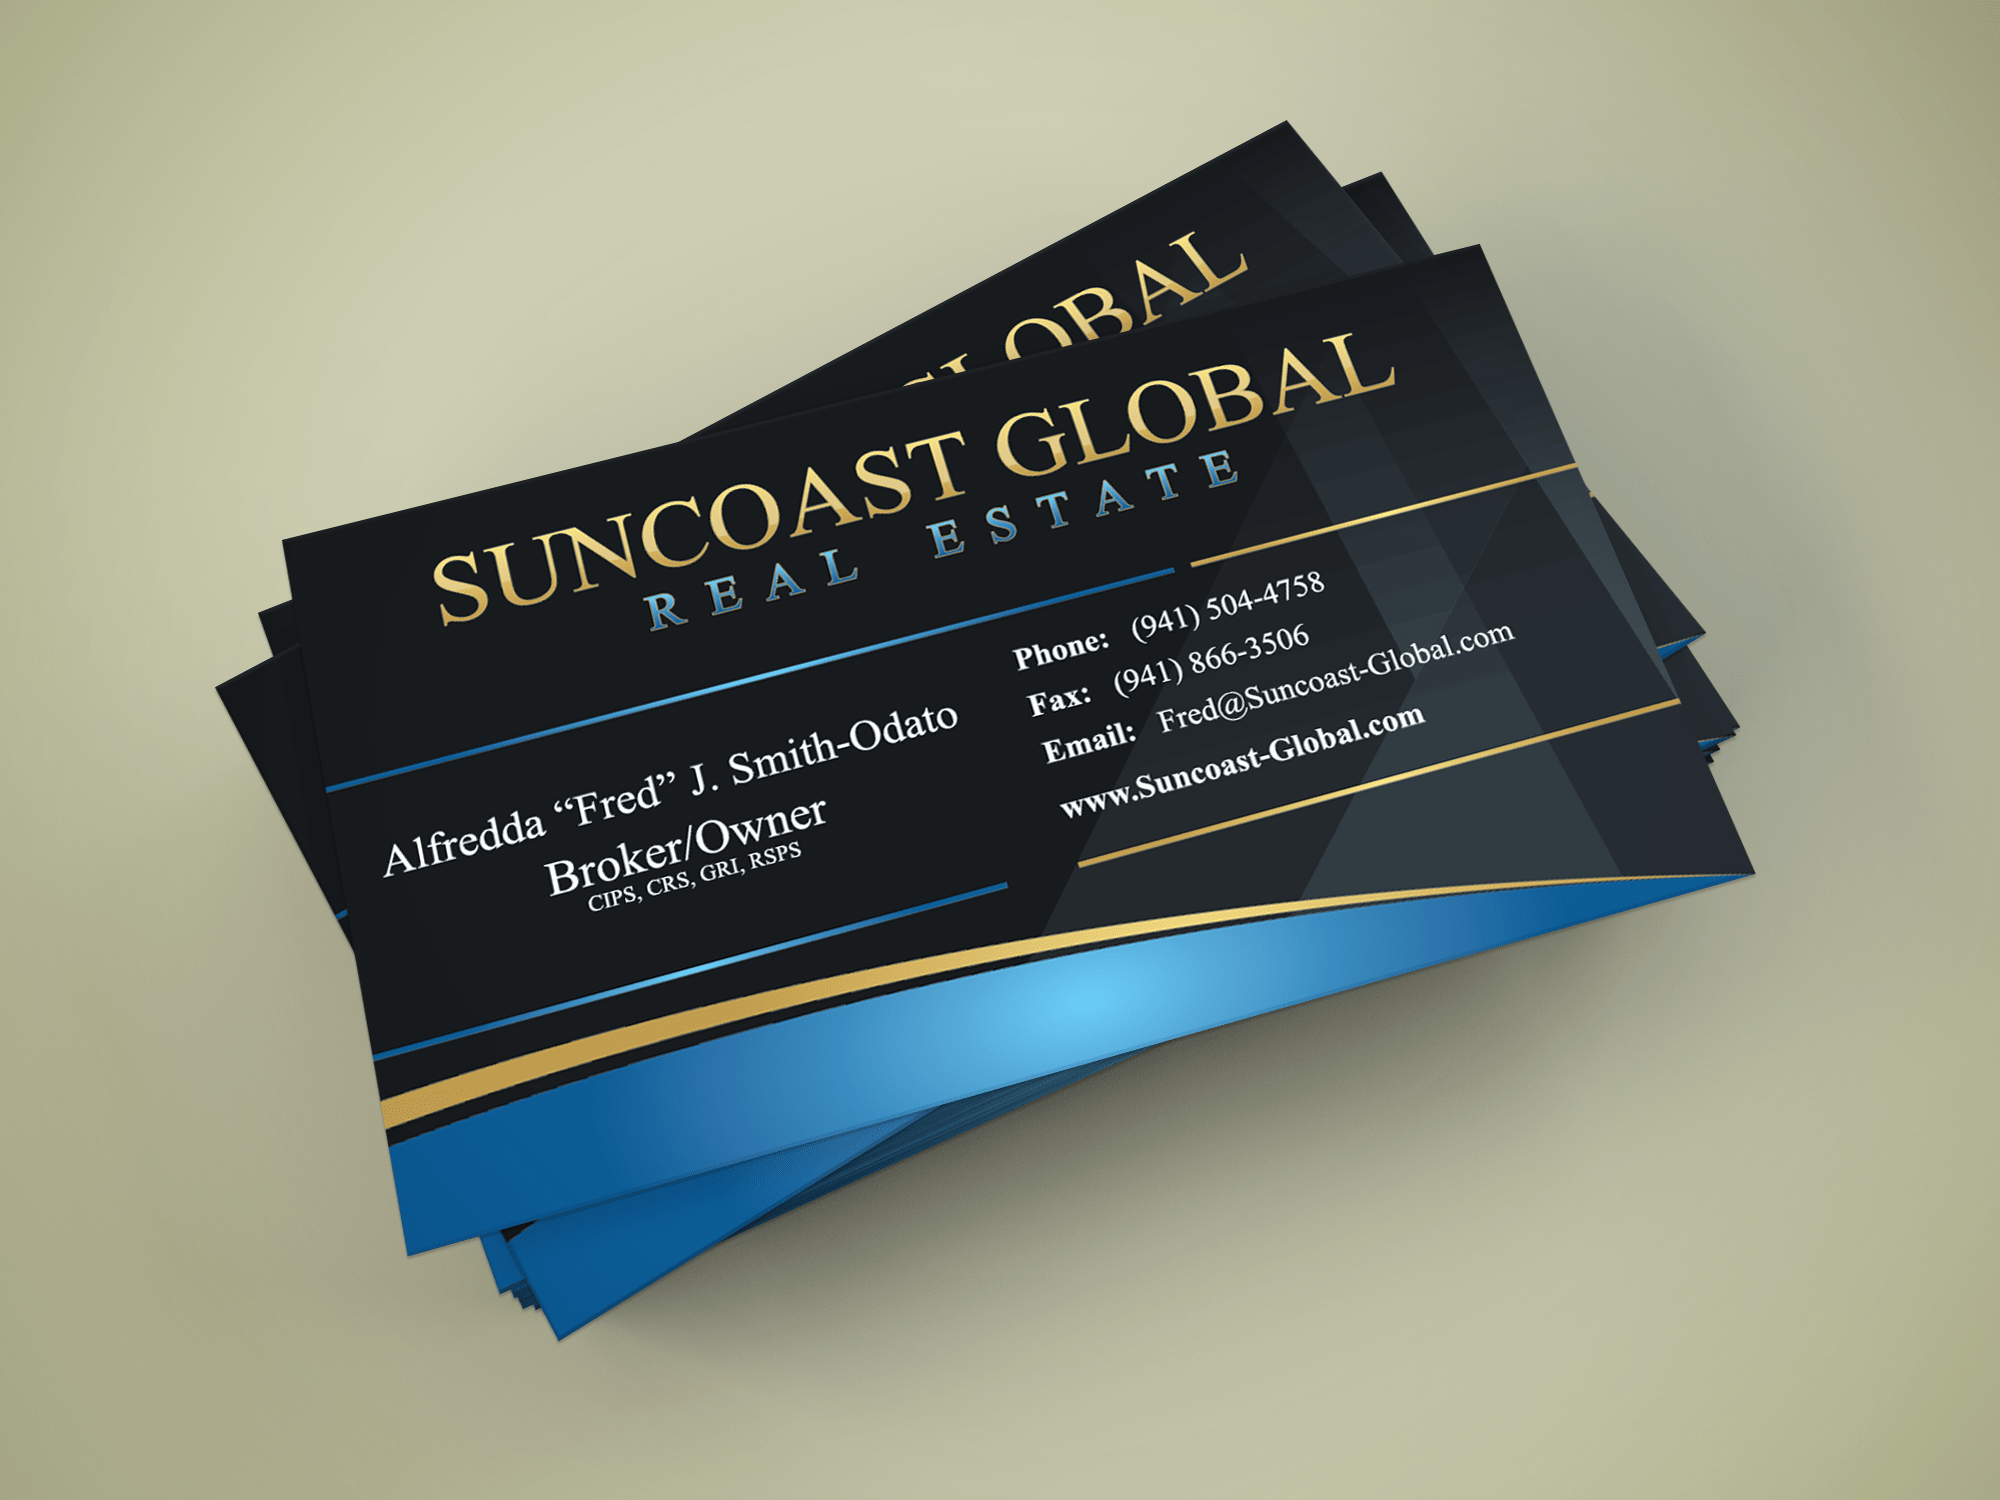 Suncoast Global CARD14